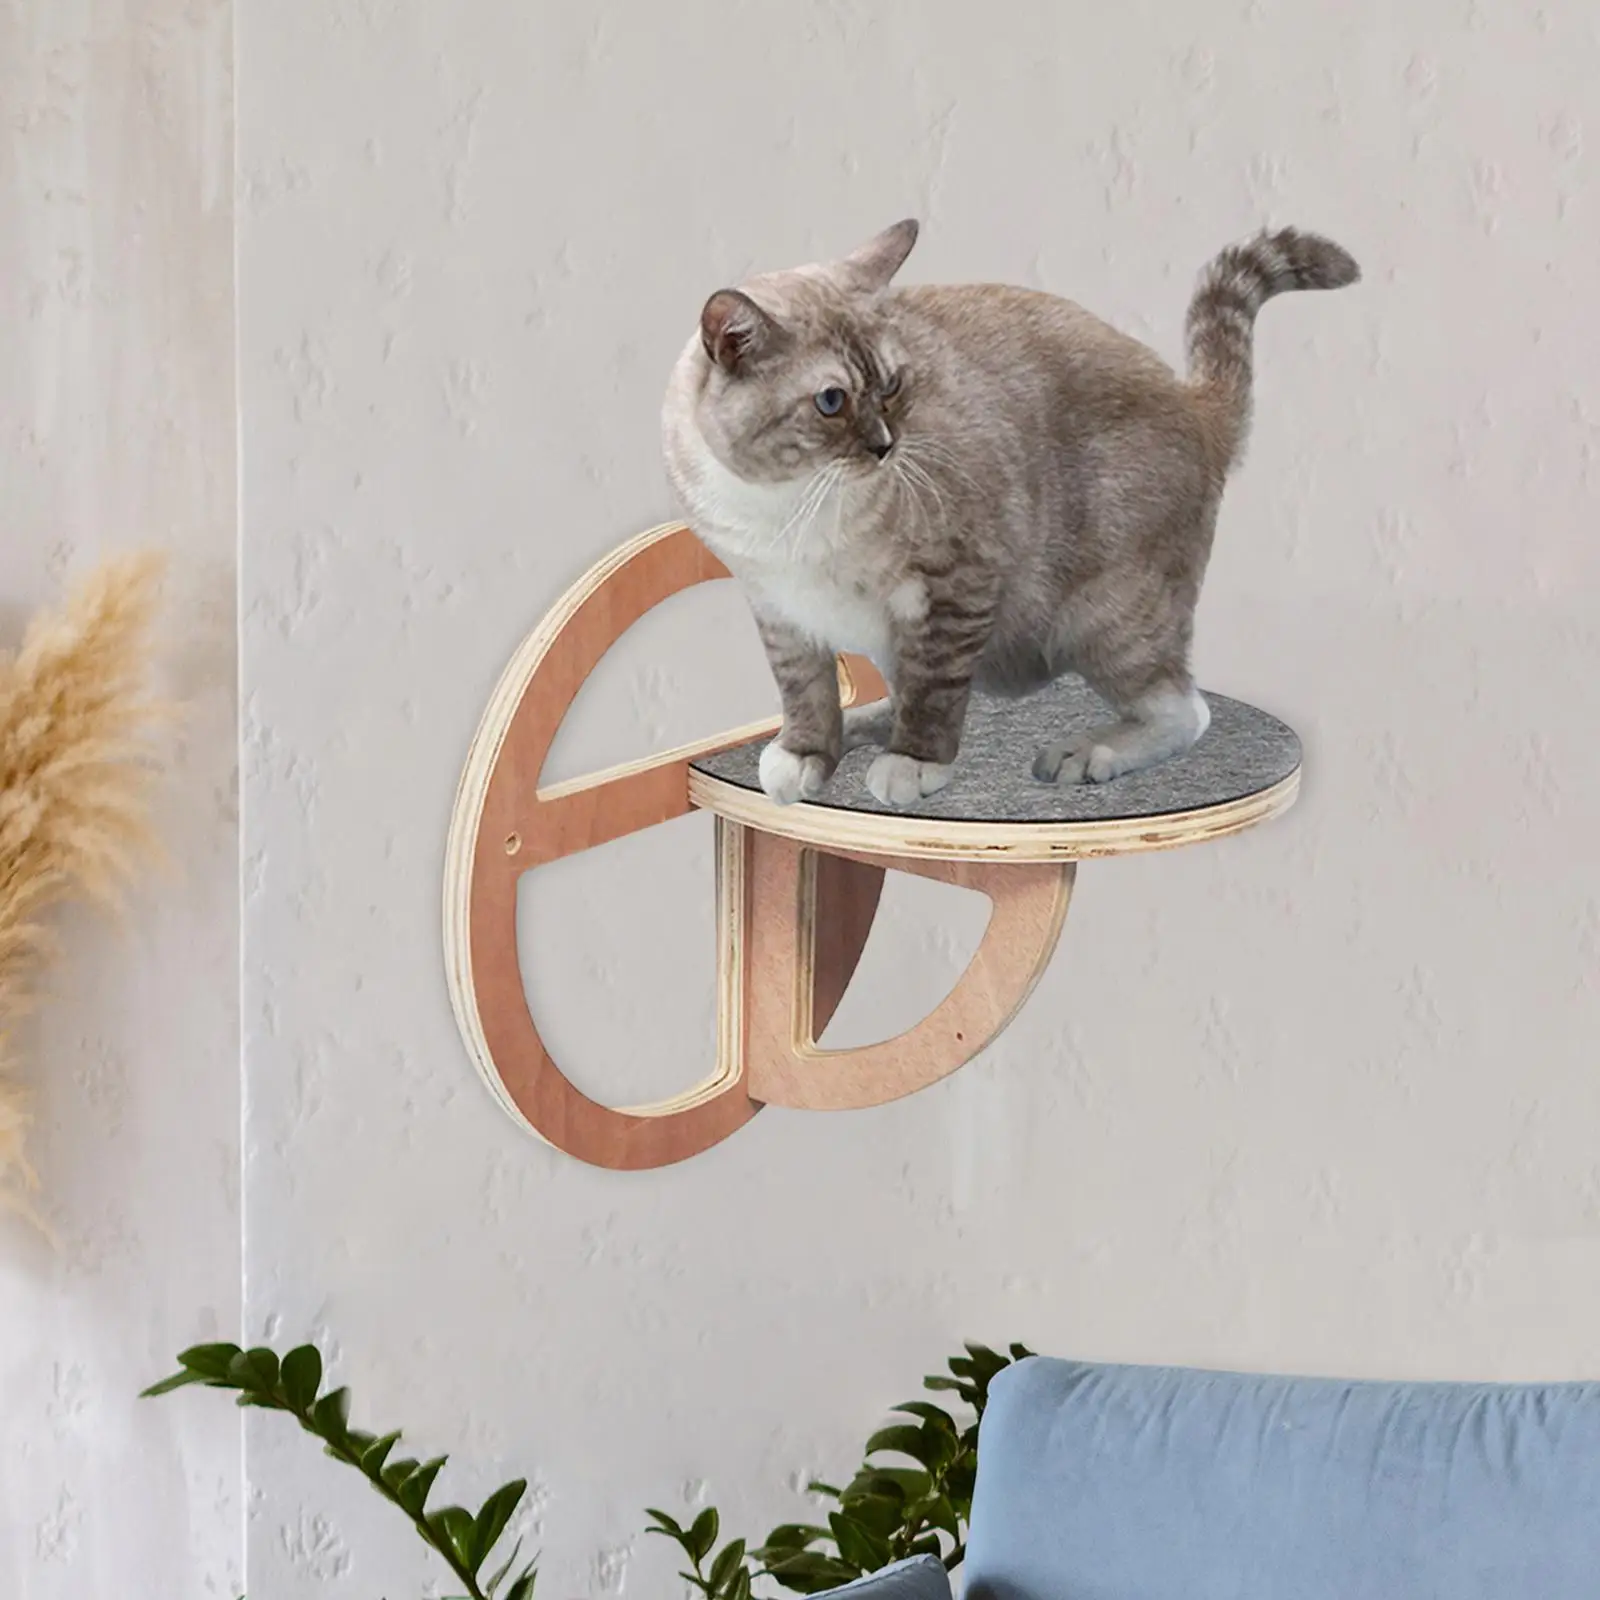 Cat Shelves Wall Mounted Pet Supplies Wooden Cat Playing Platform Cat Climbing Board for Kitten Indoor Cats Climbing Playing